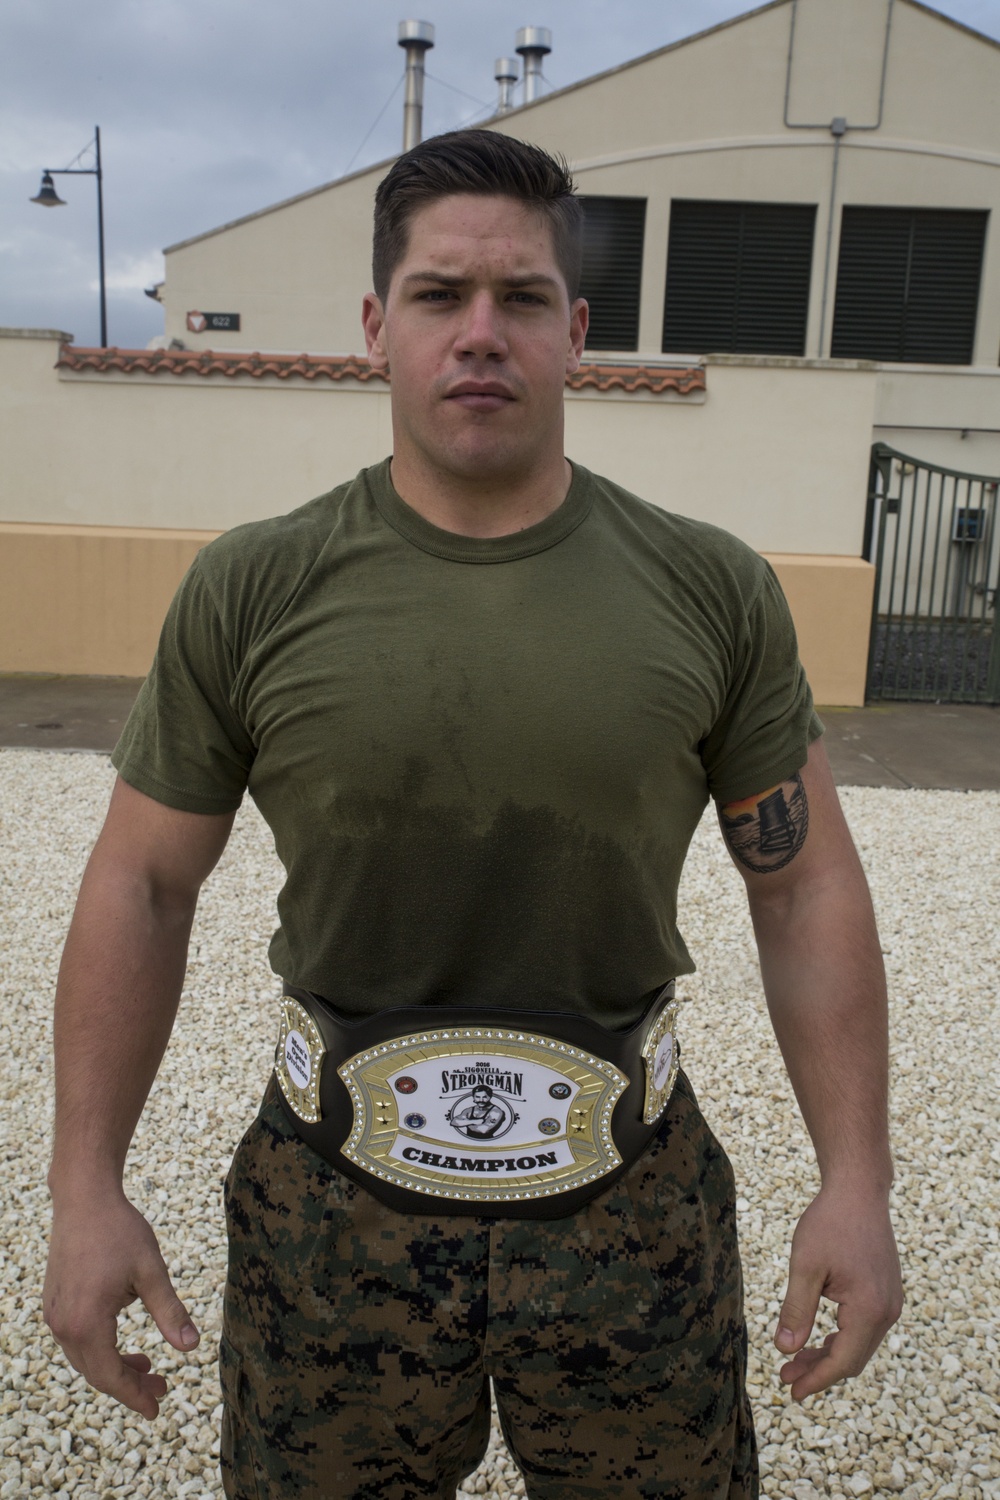 U.S. Marine wins strongman competition